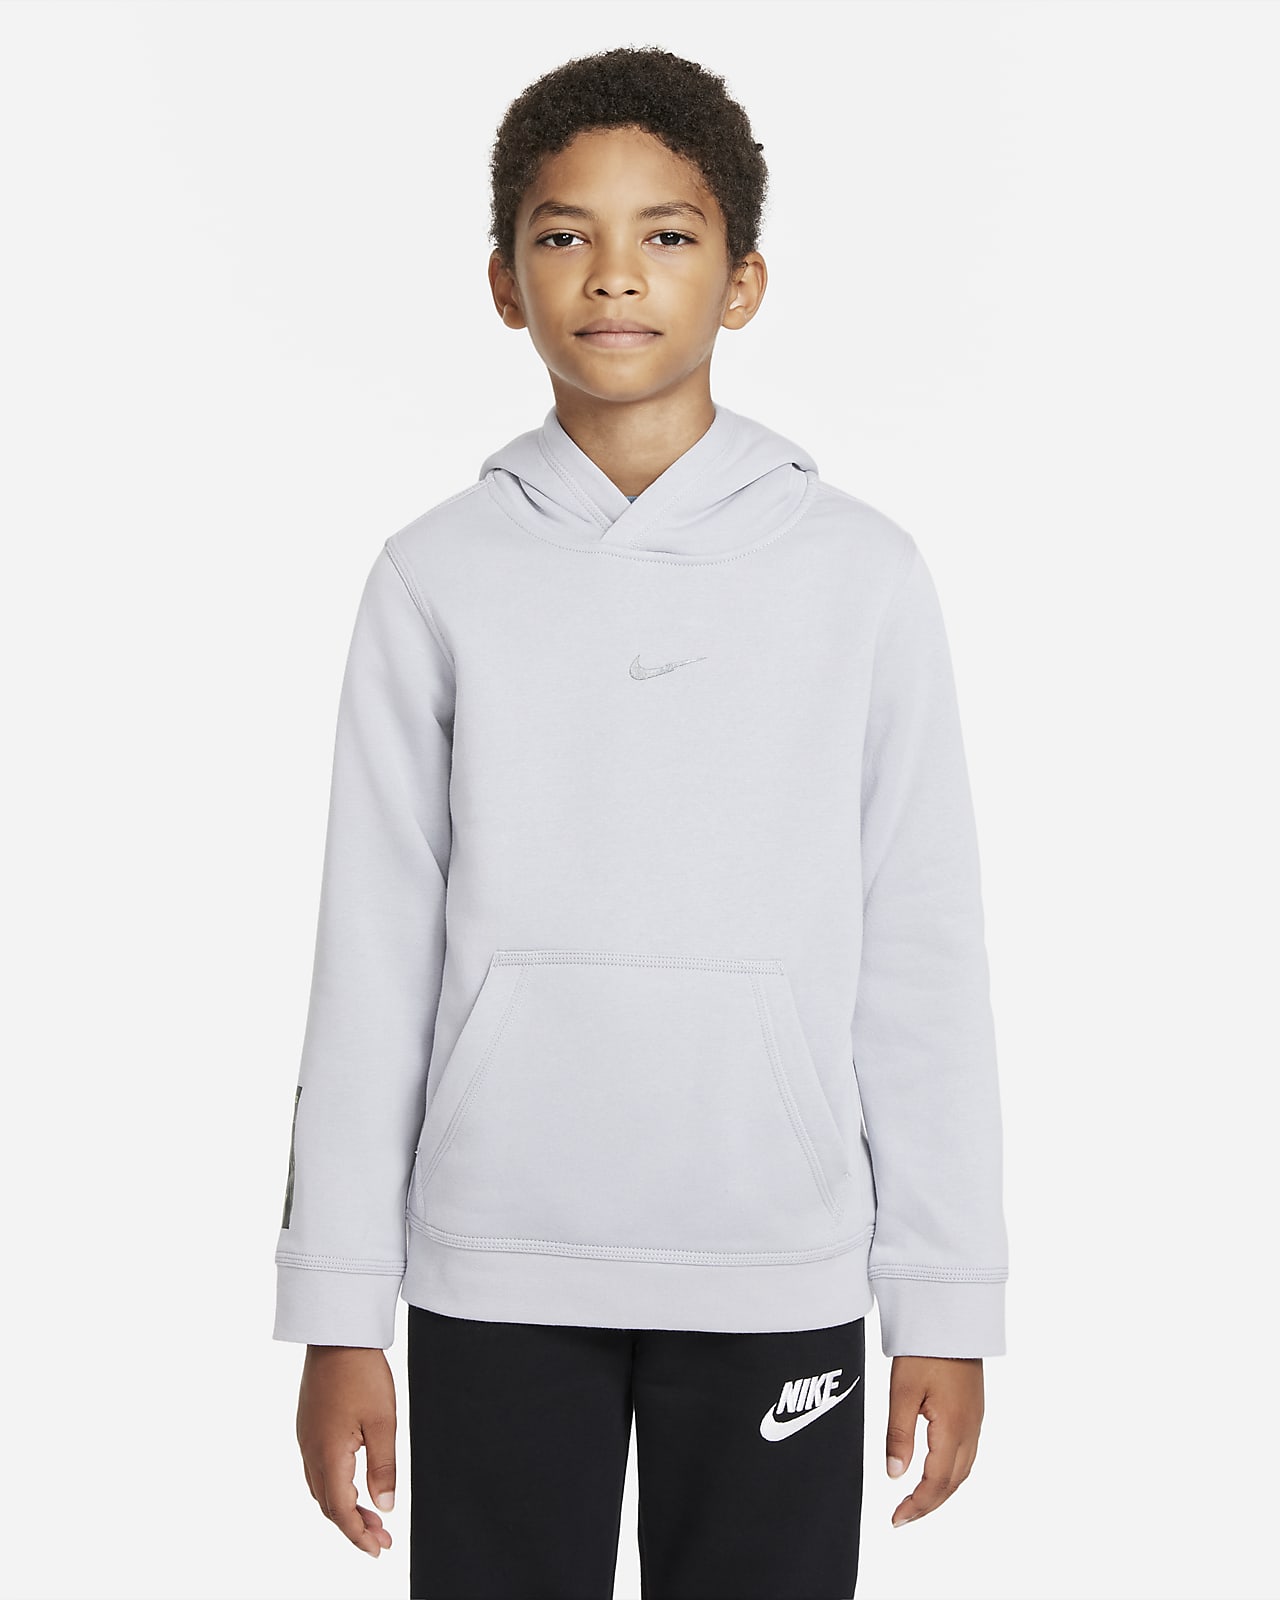 Nike Sportswear Fleece-Hoodie für ältere Kinder (Jungen)